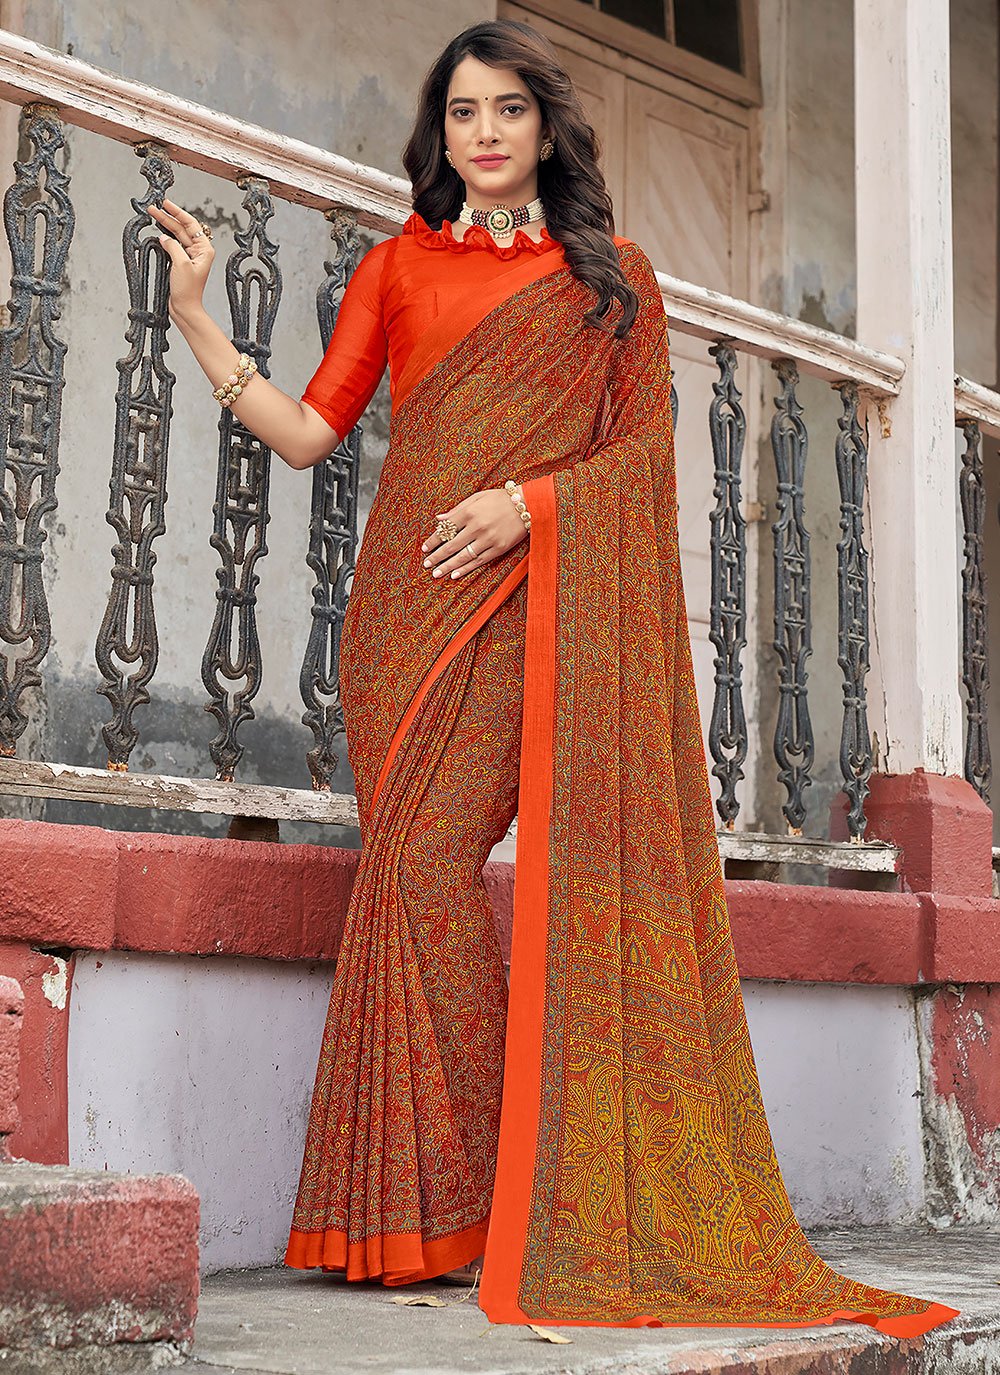 Lavish Chiffon Saree Designs and Styles to Wear | DESIblitz